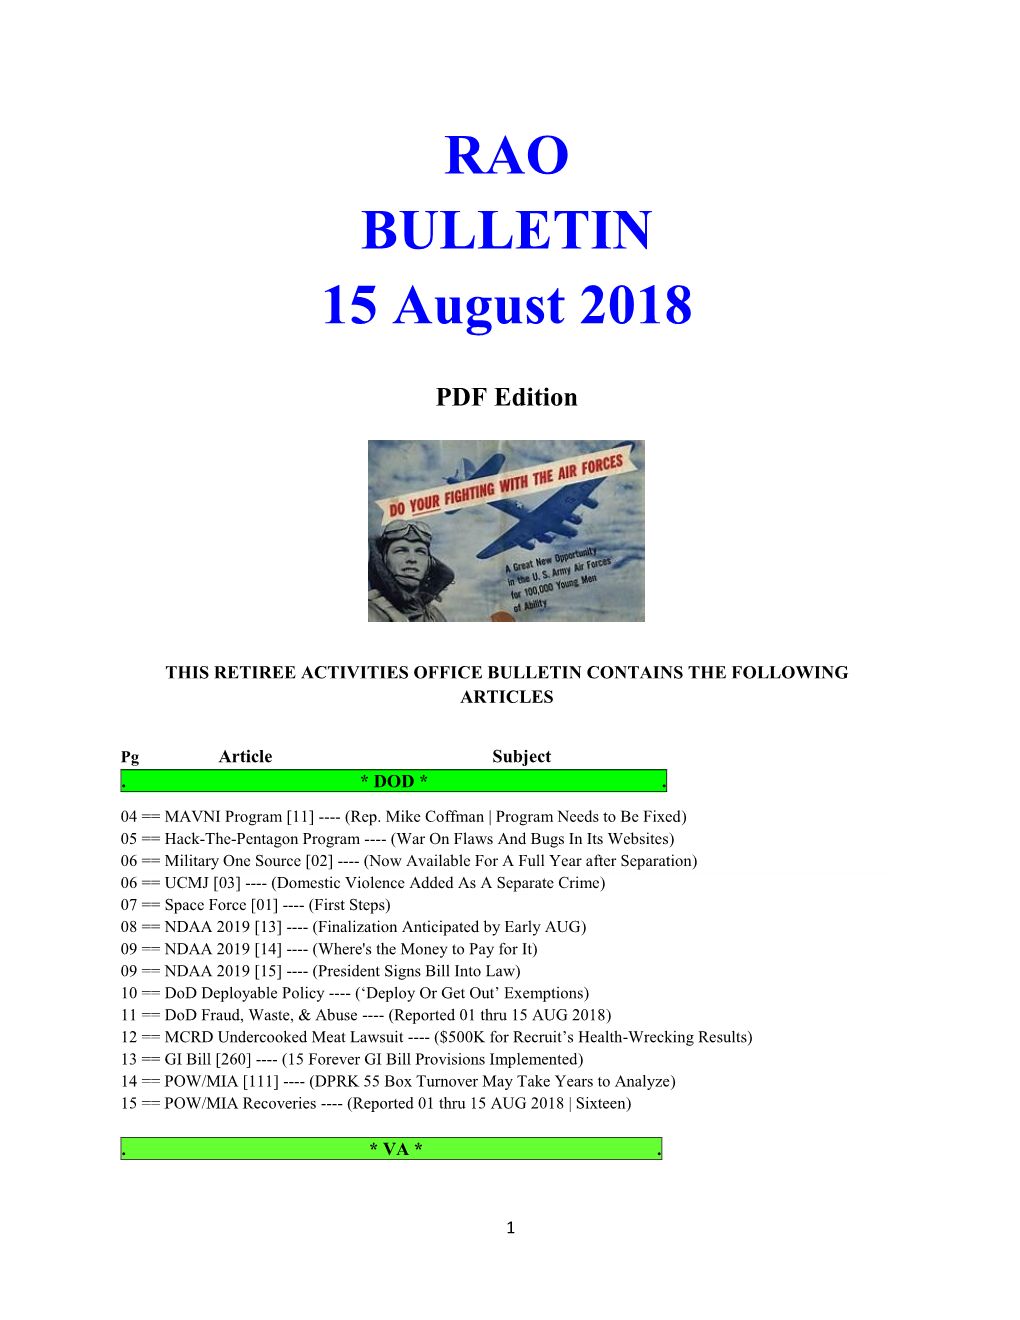 RAO BULLETIN 15 August 2018